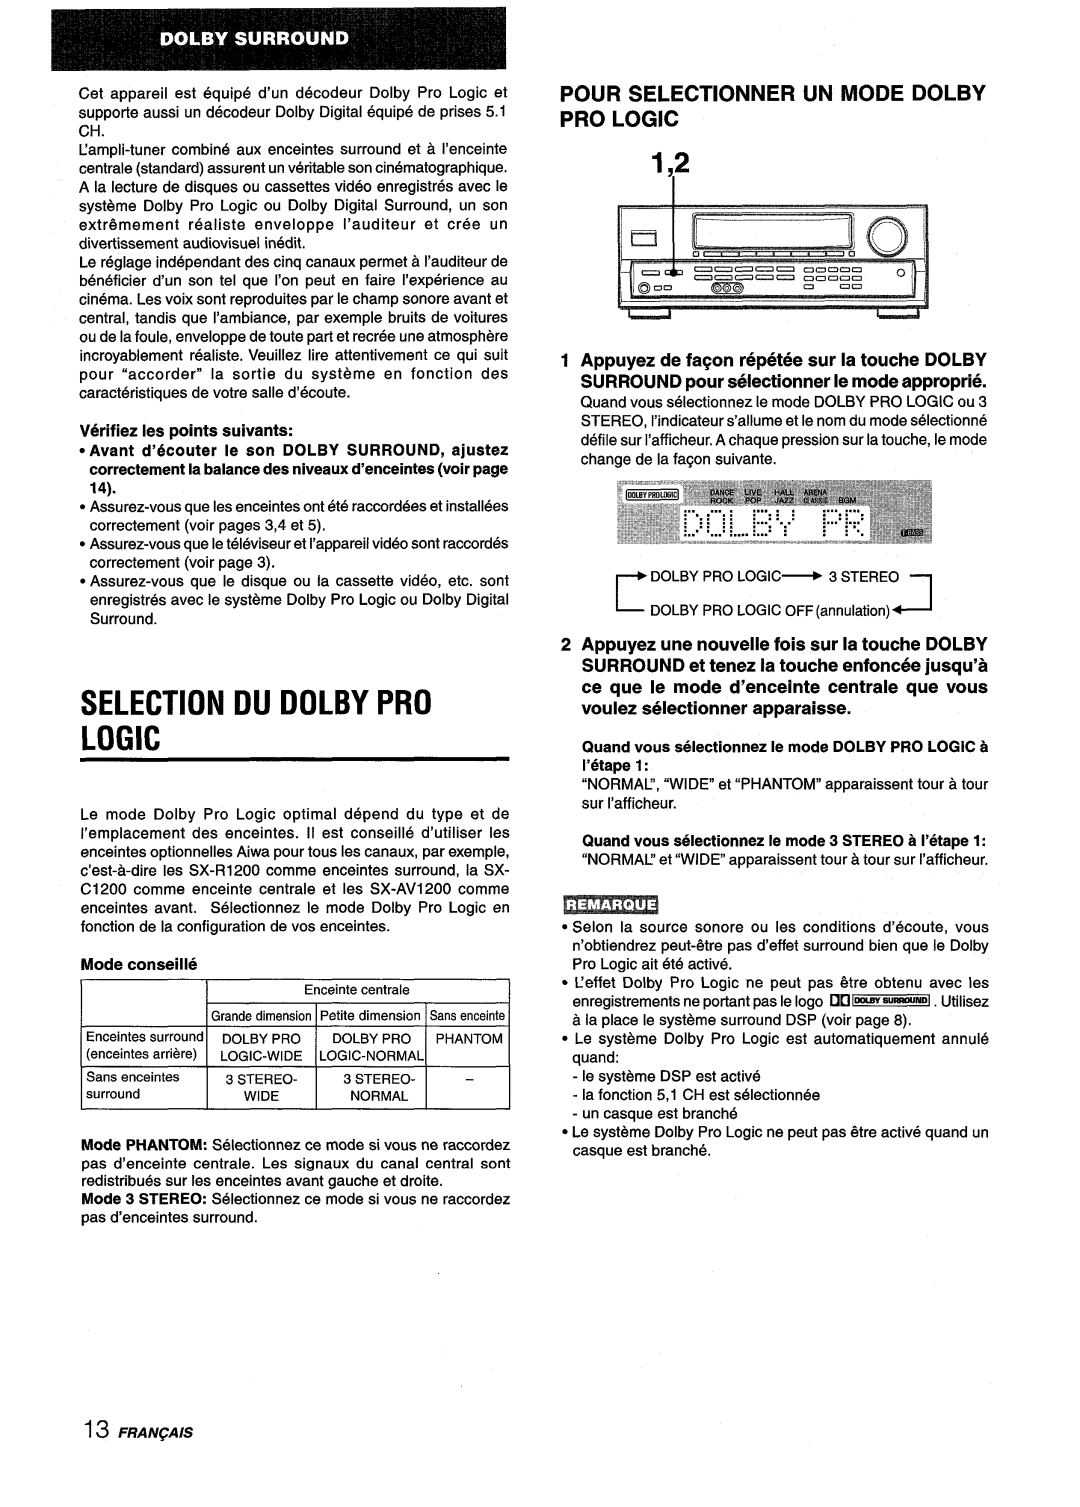 Aiwa AV-D25 manual Selection Du Dolby Pro Logic, Pour Selectionner Un Mode Dolby Pro Logic 